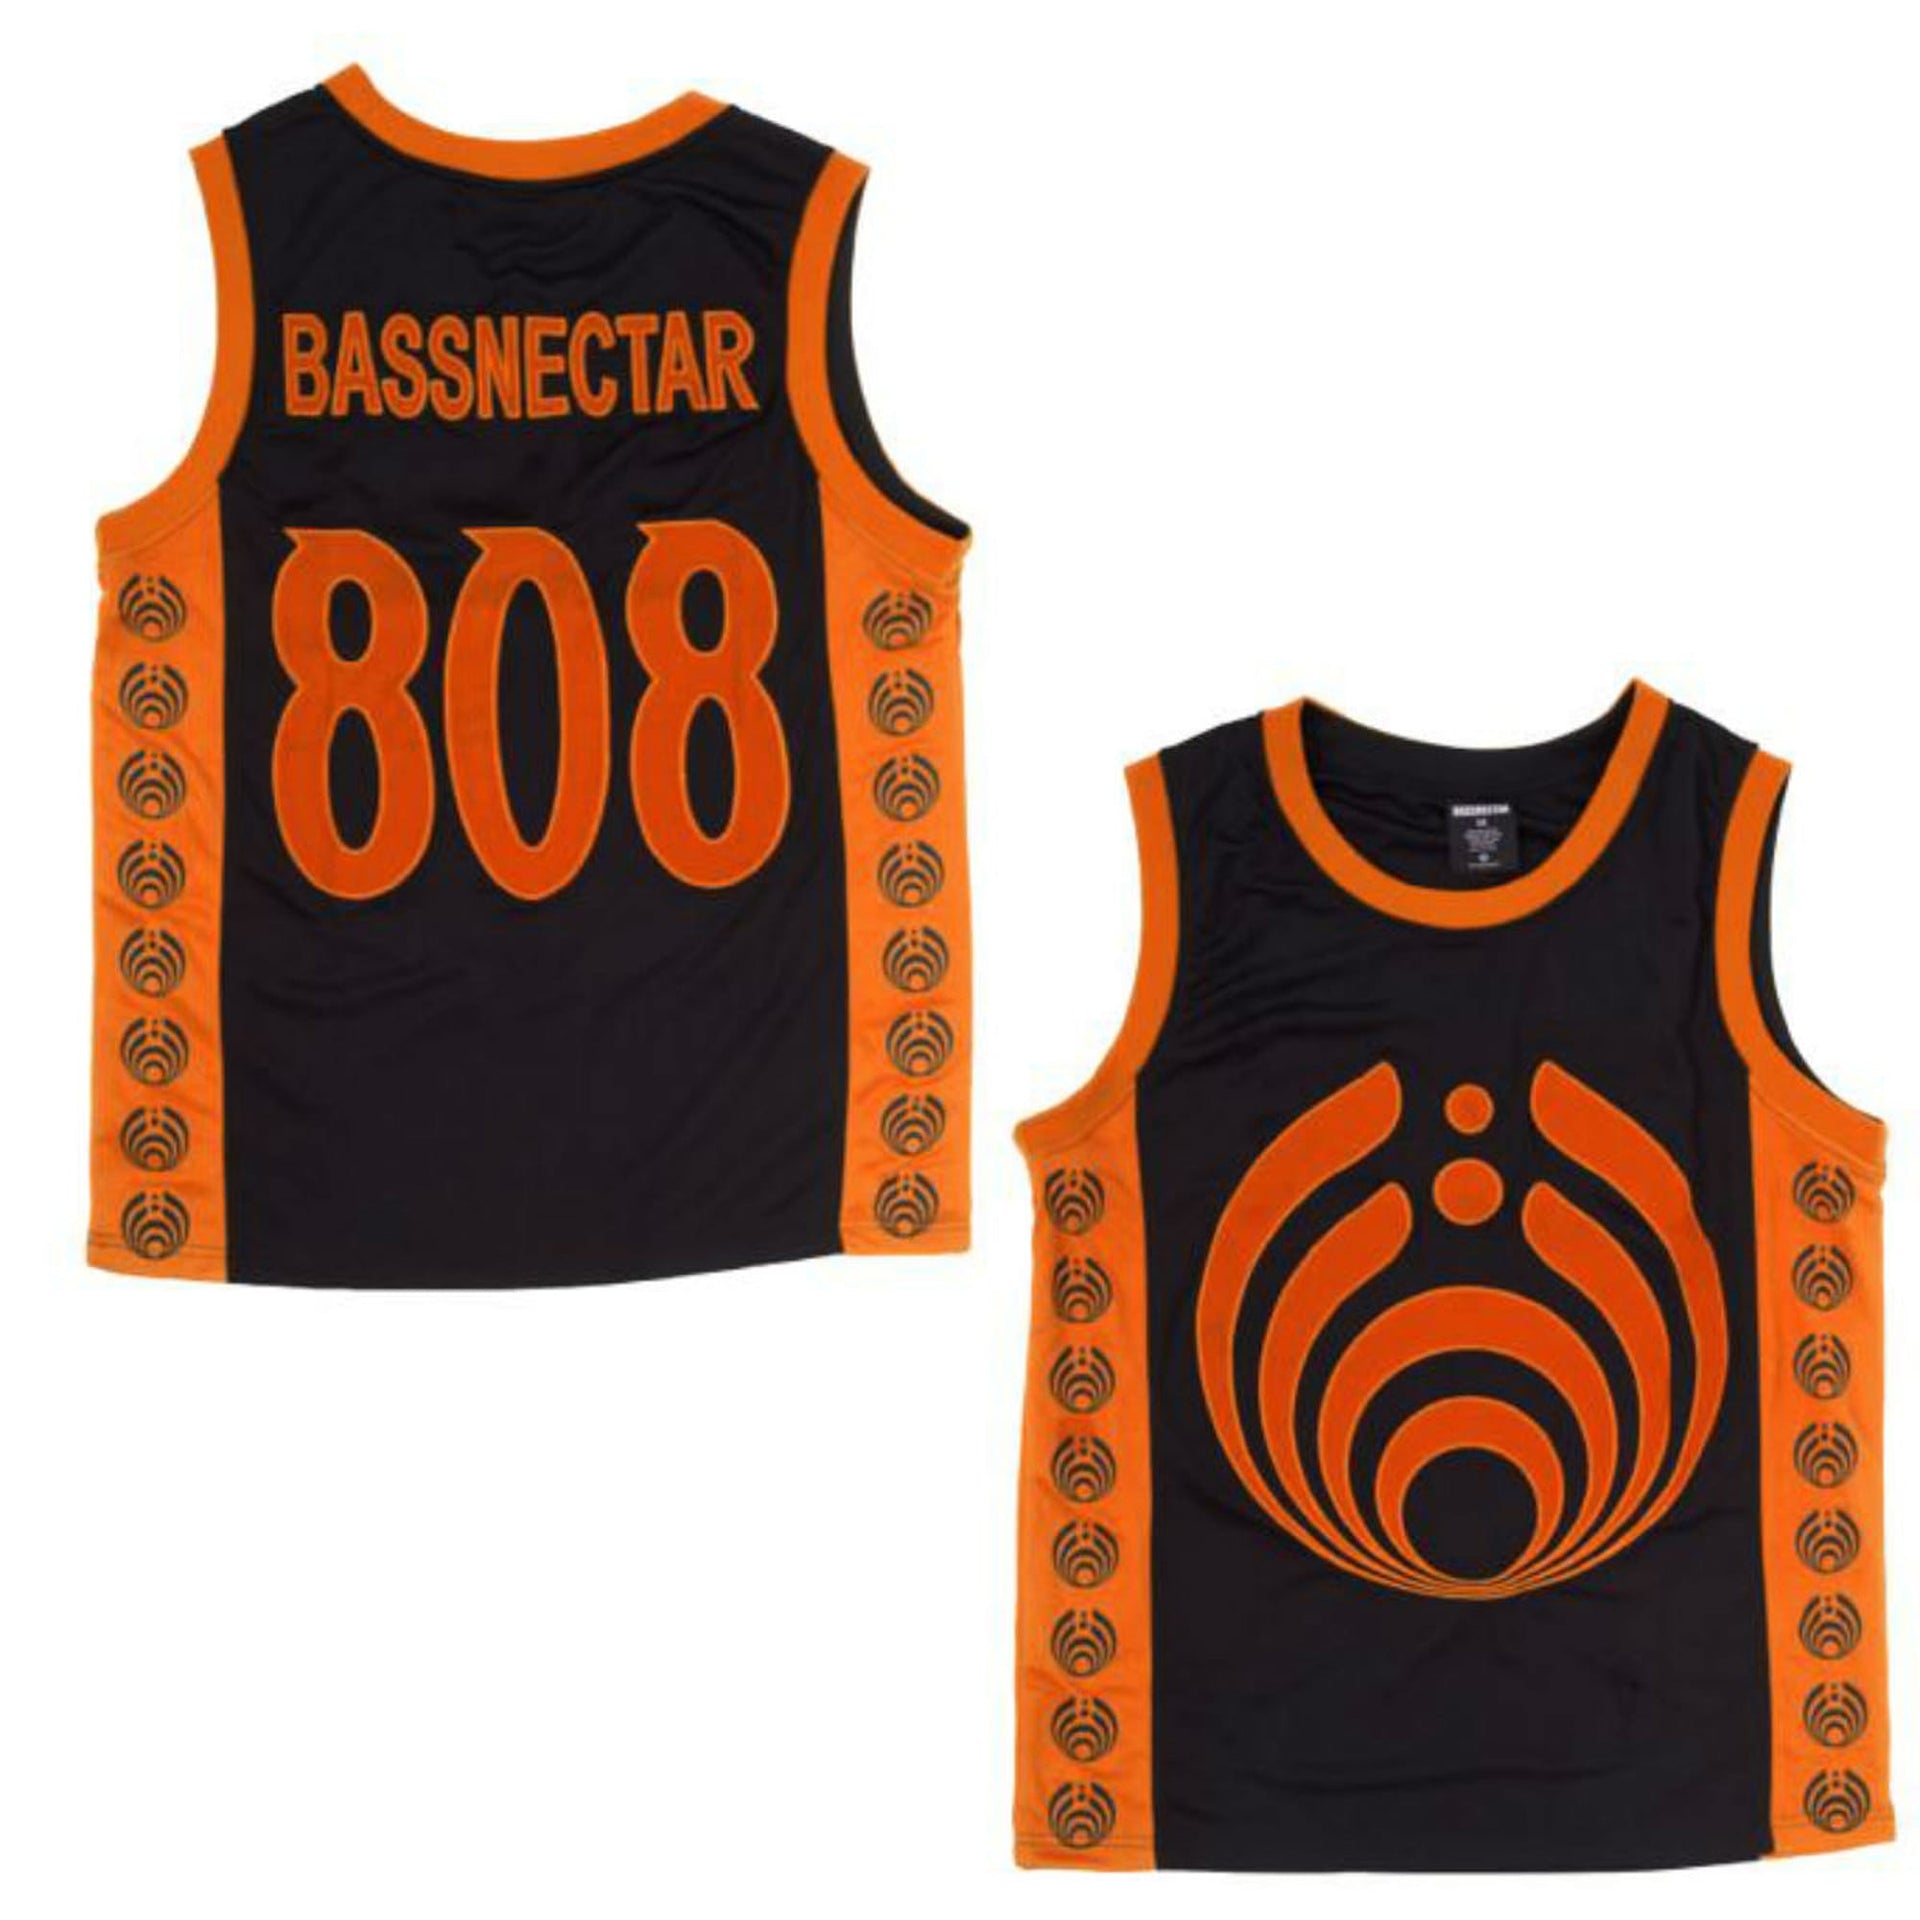 Bassdrop 808 Basketball Jersey - Orange/Black